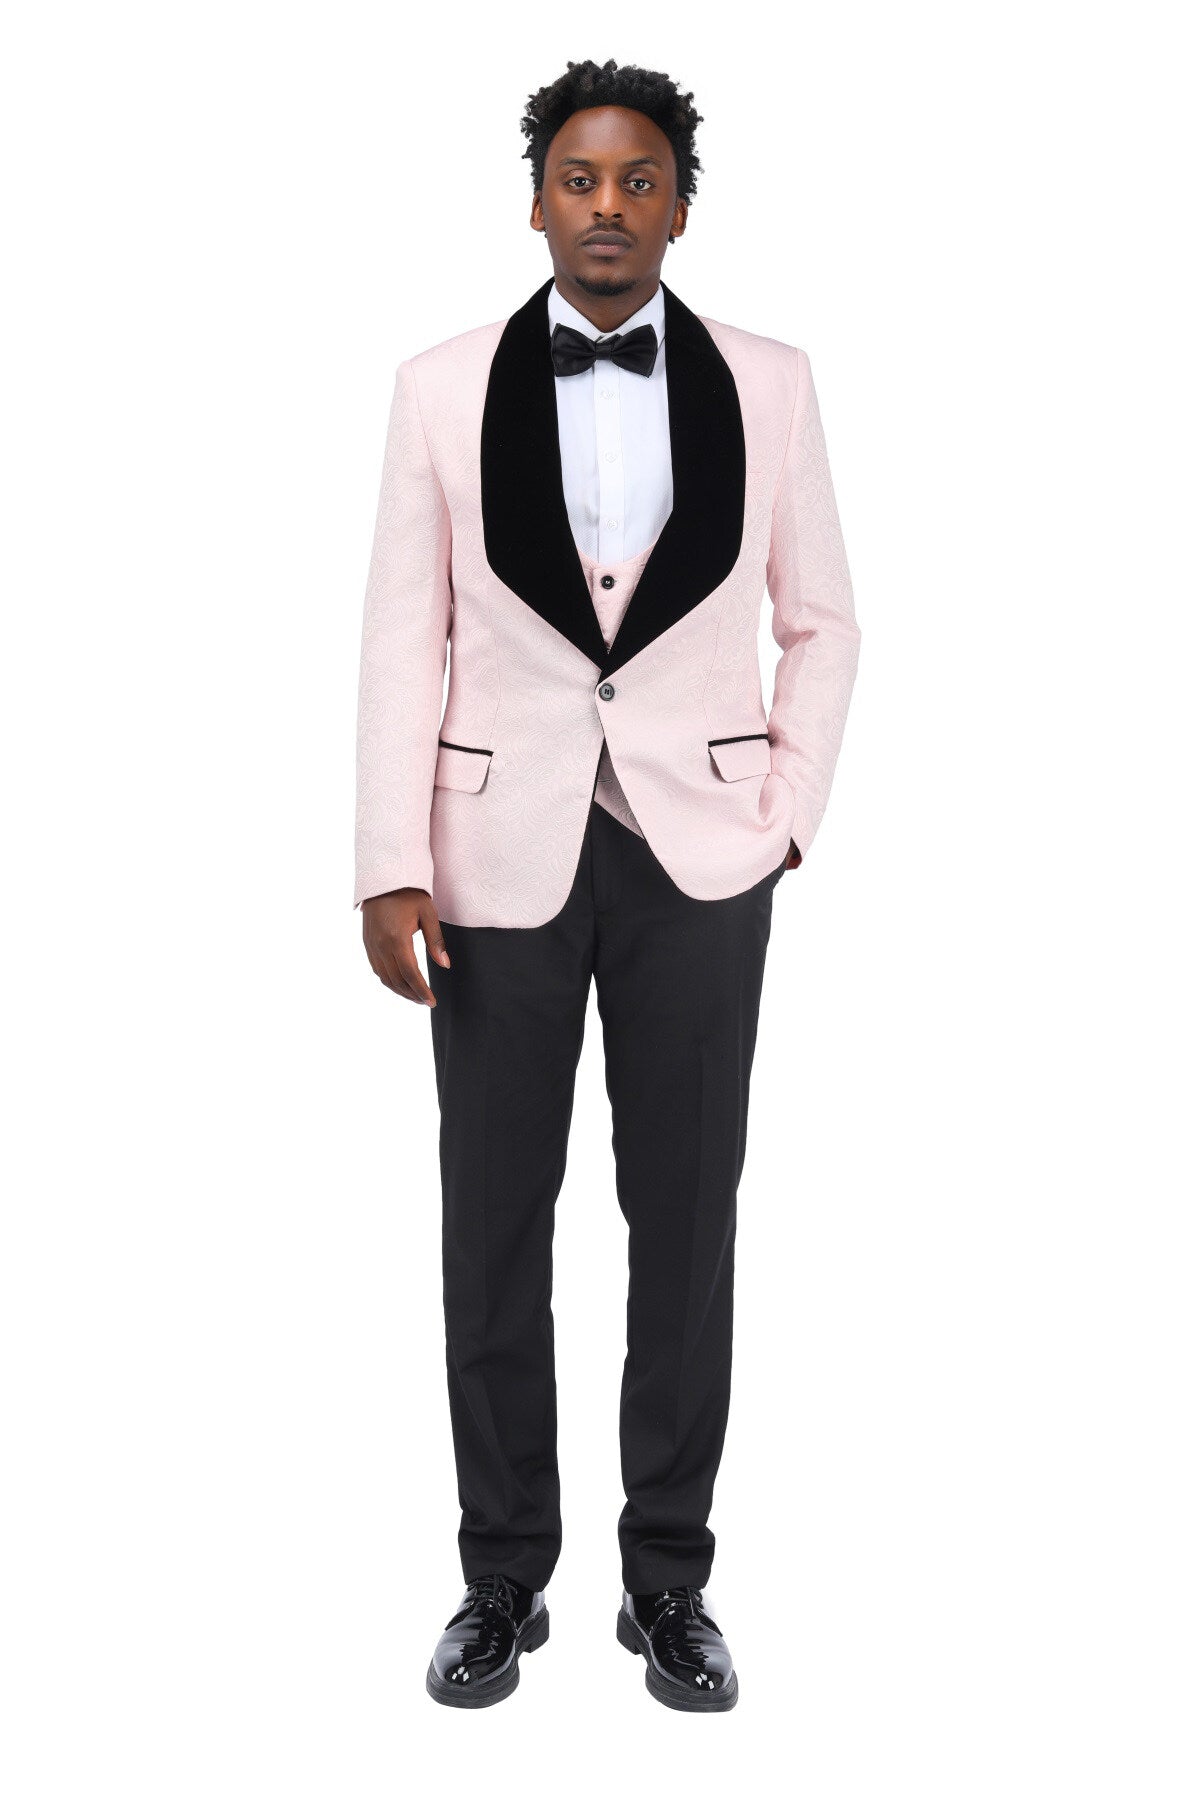 3-Piece Paisley Pink Suit Shawl Collar Suit